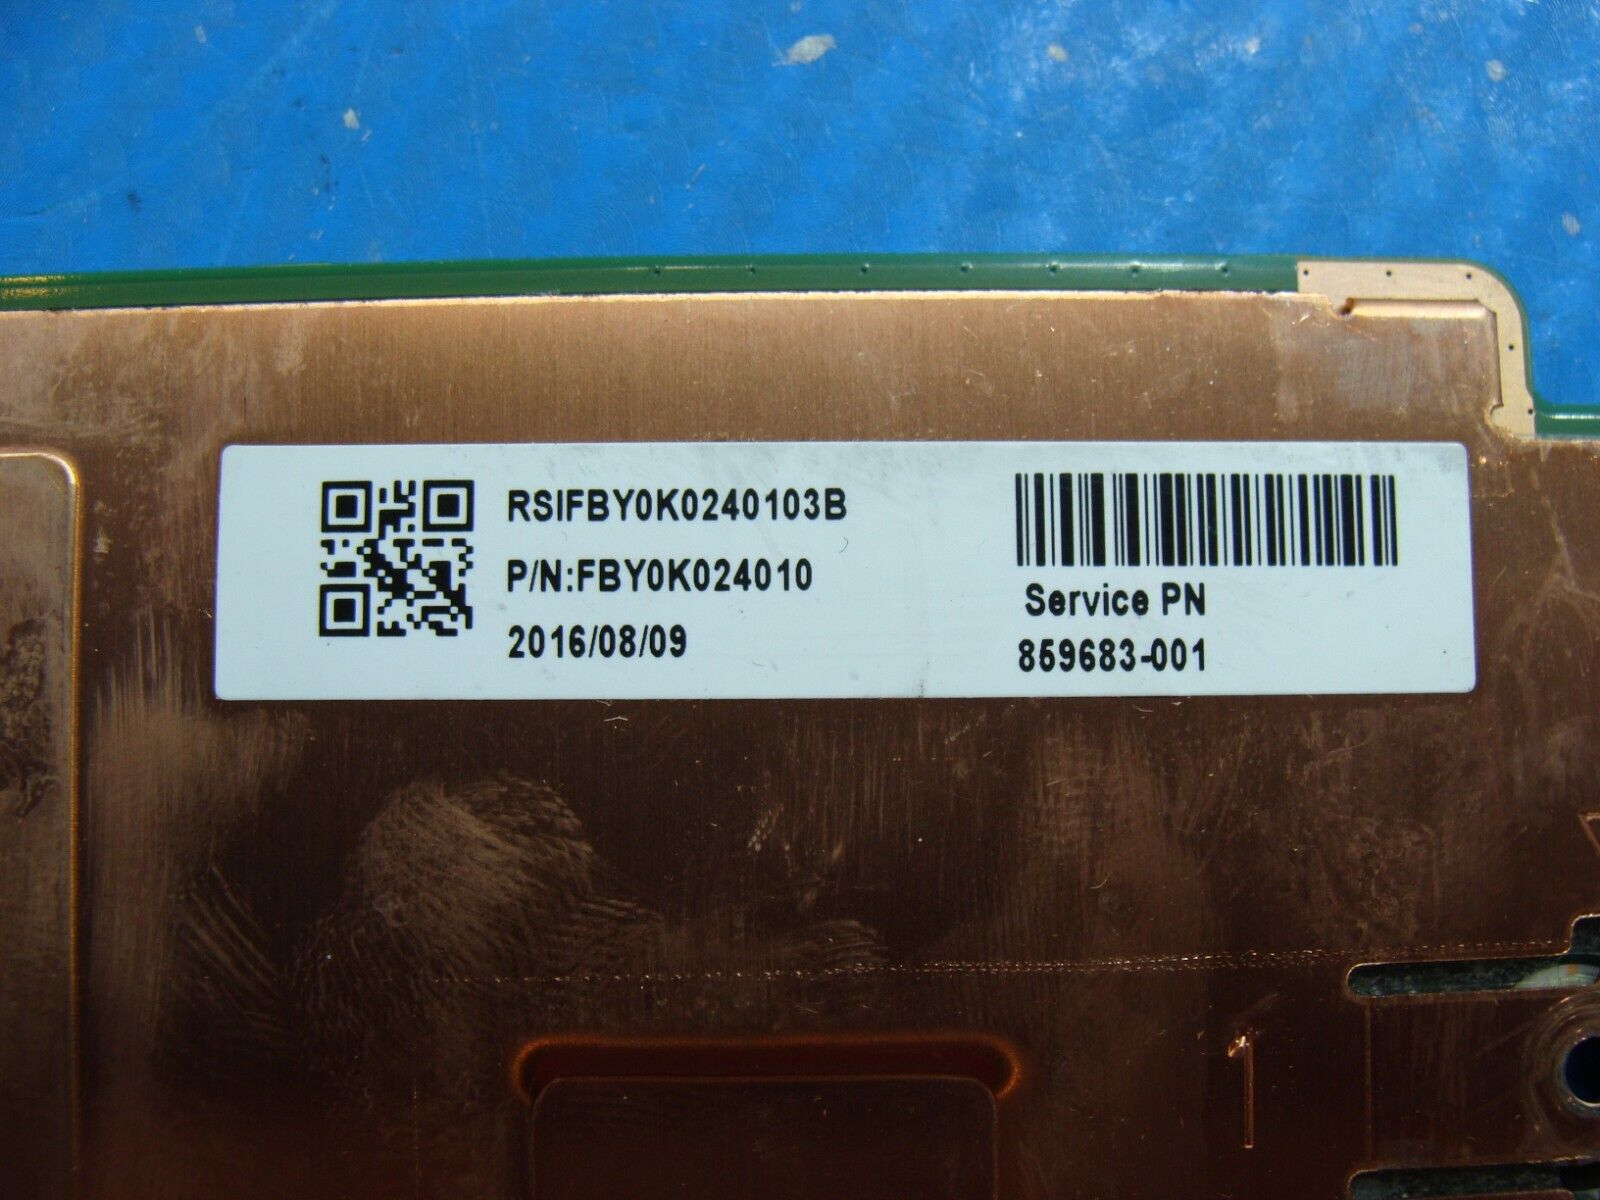 HP Chromebook 13 G1 13.3